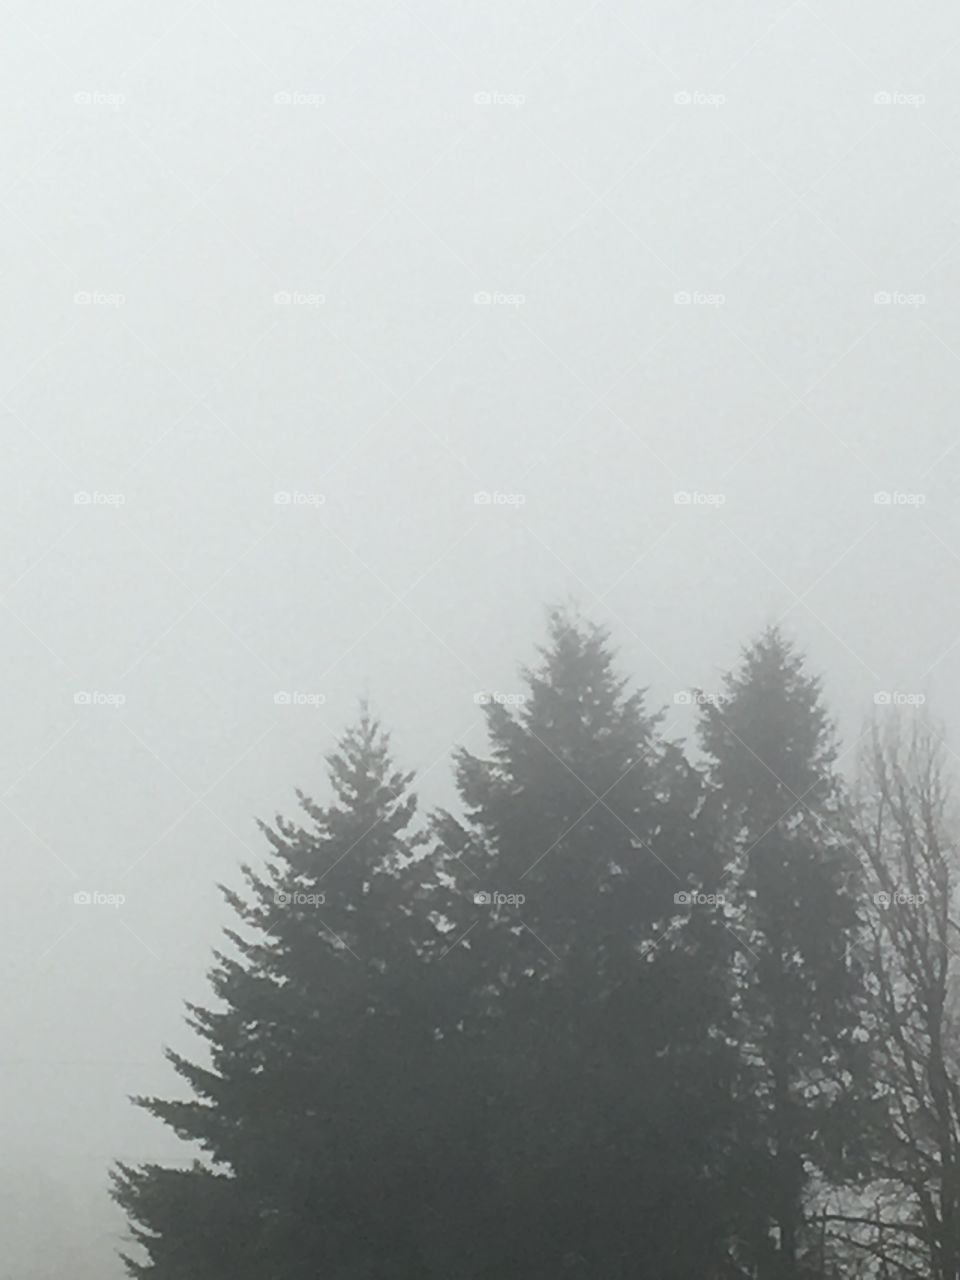 Giants in the fog 